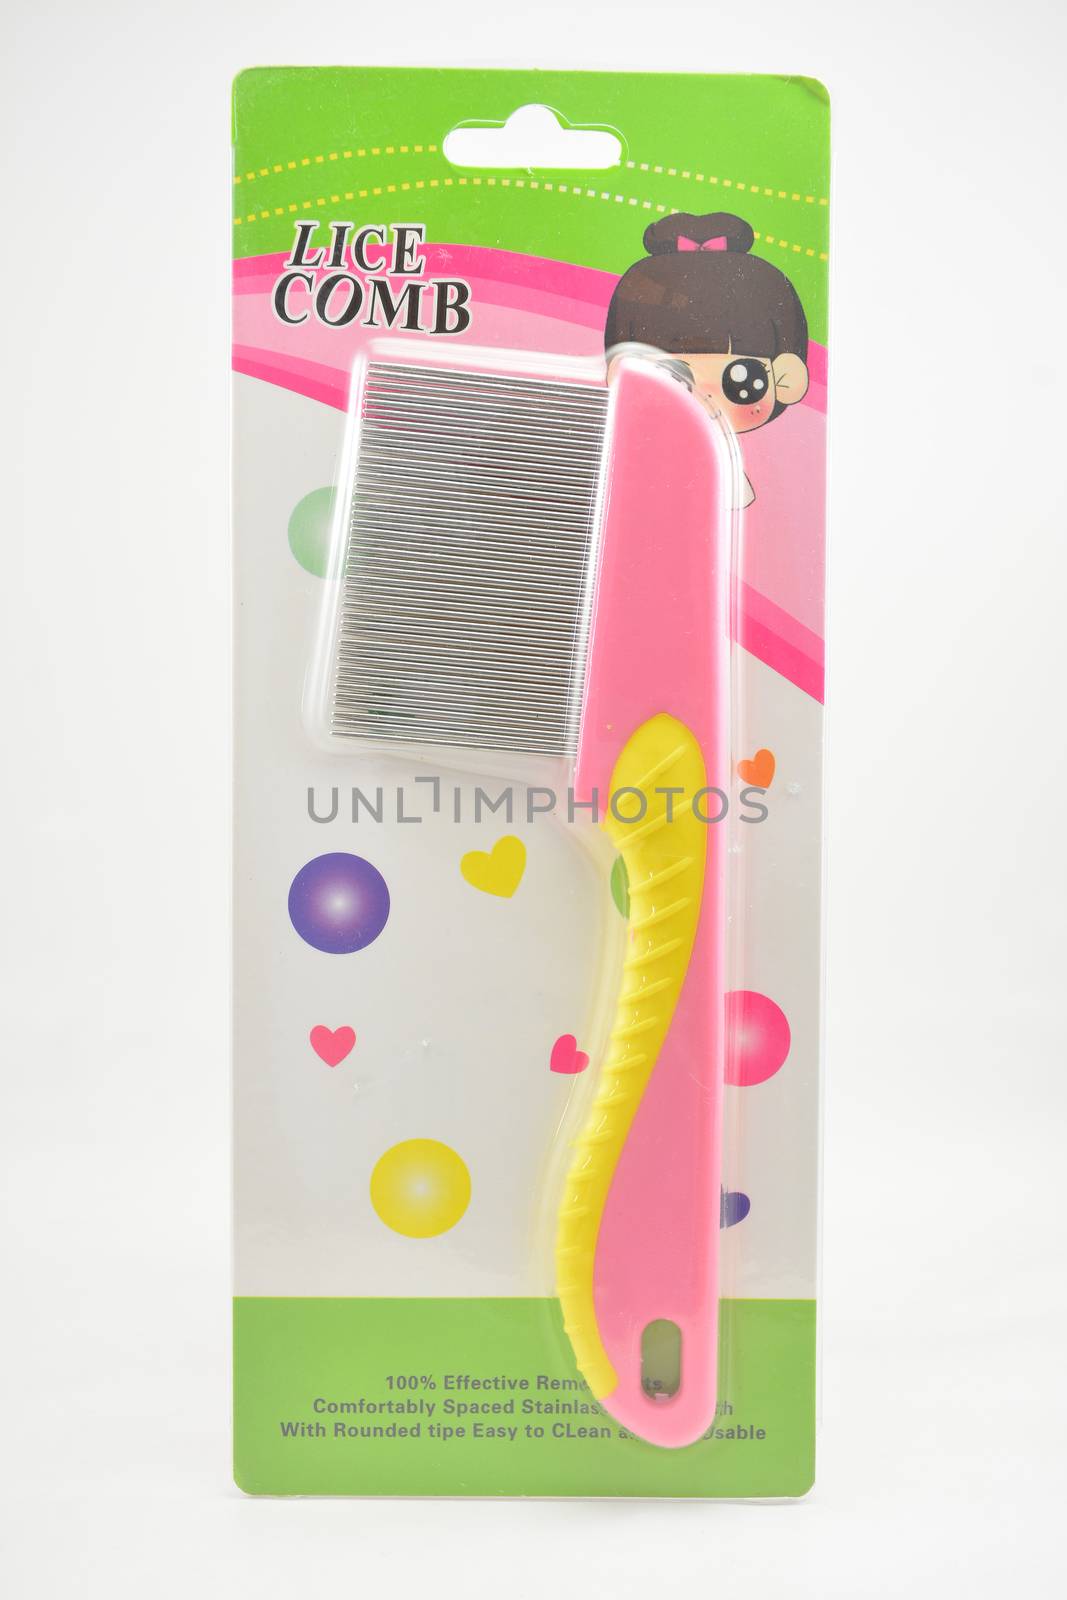 Lice comb in Manila, Philippines by imwaltersy